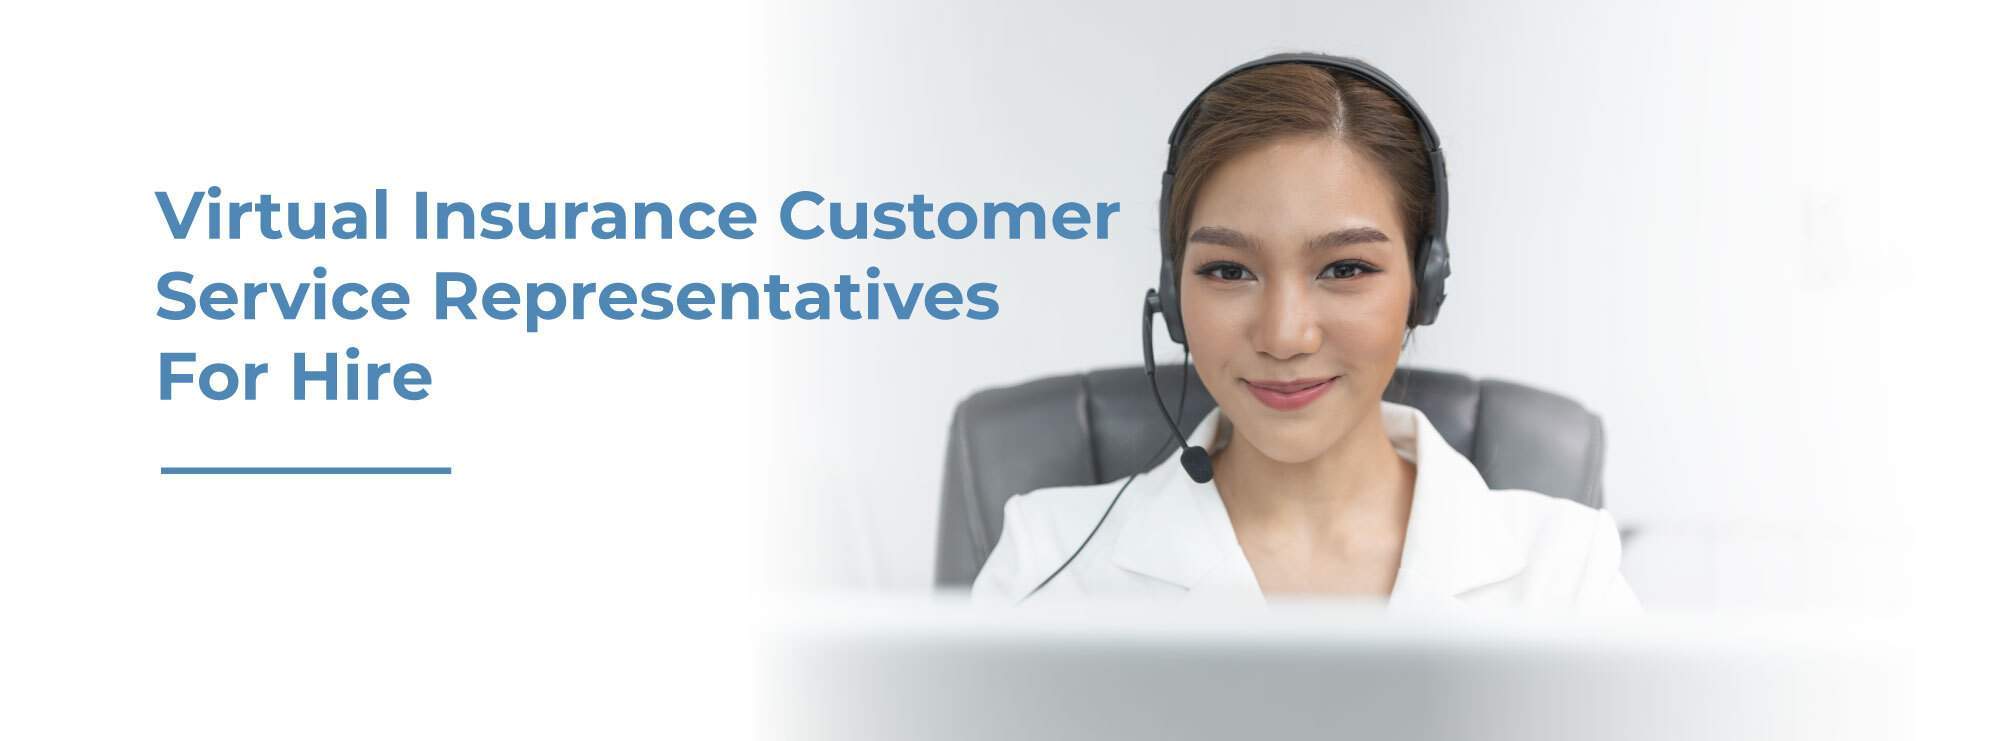 customer service virtual assistant